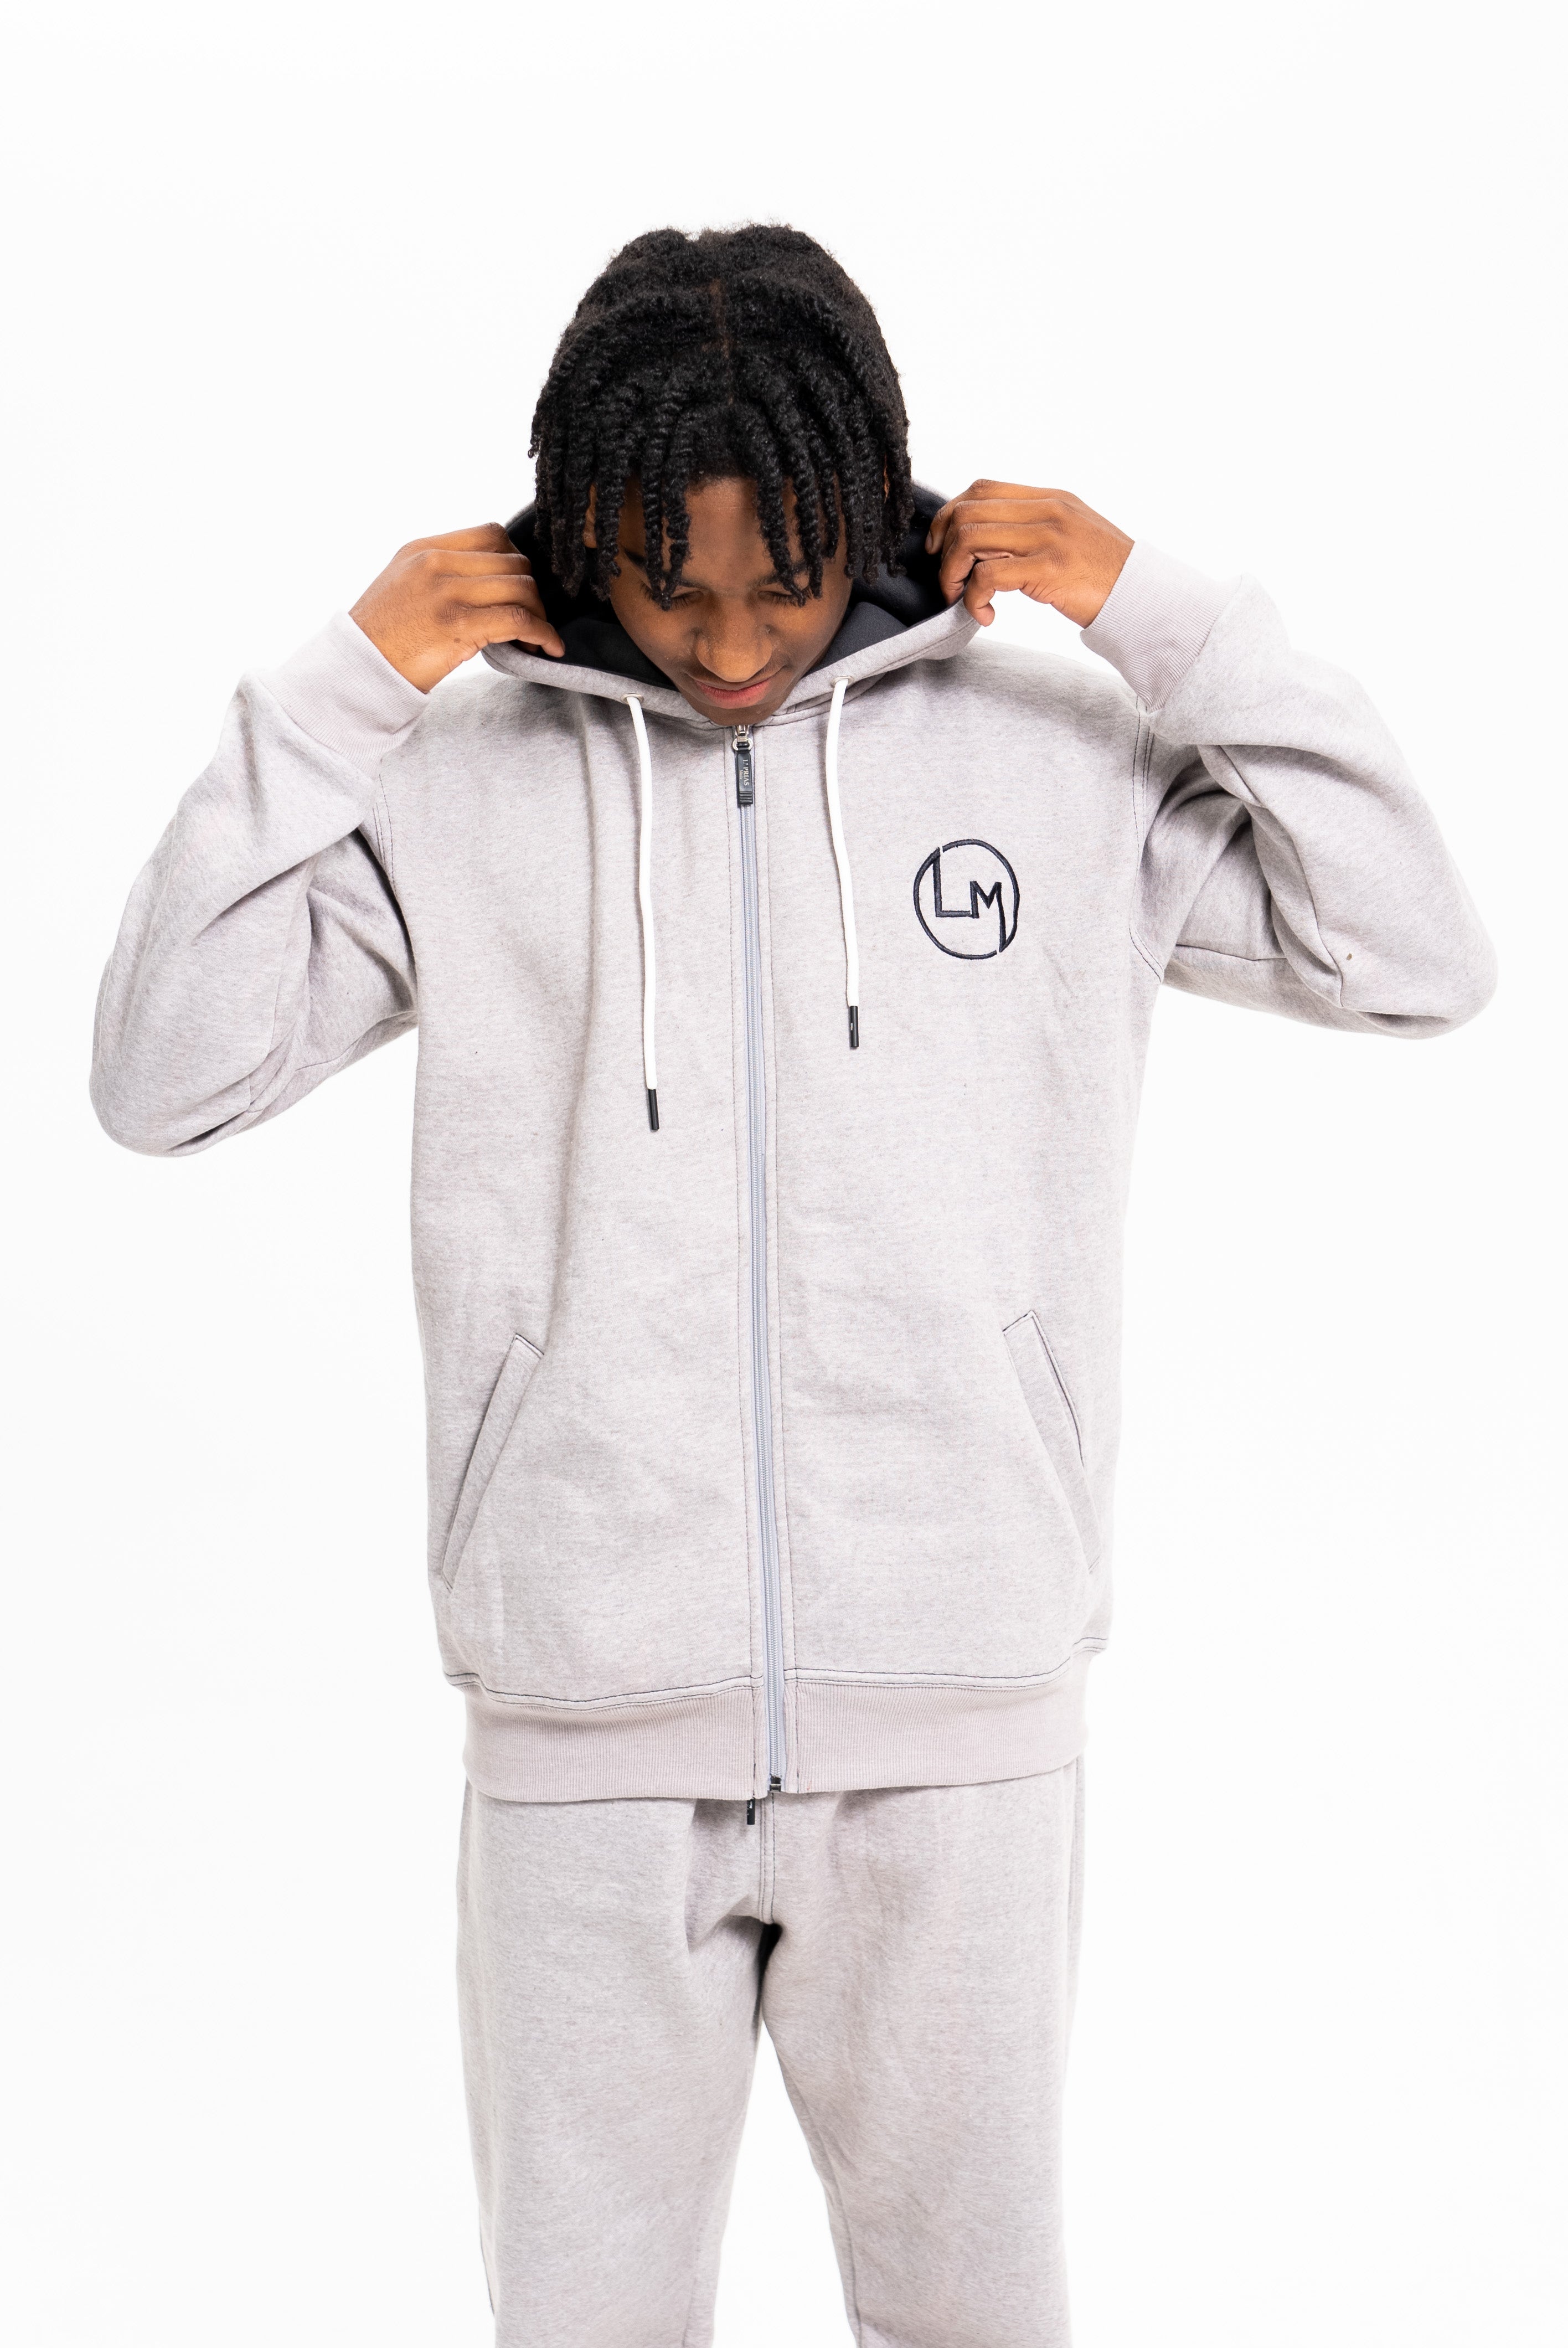 Gray Cotton Fleece Sweatsuit - Cozy & Multipurpose - Unisex